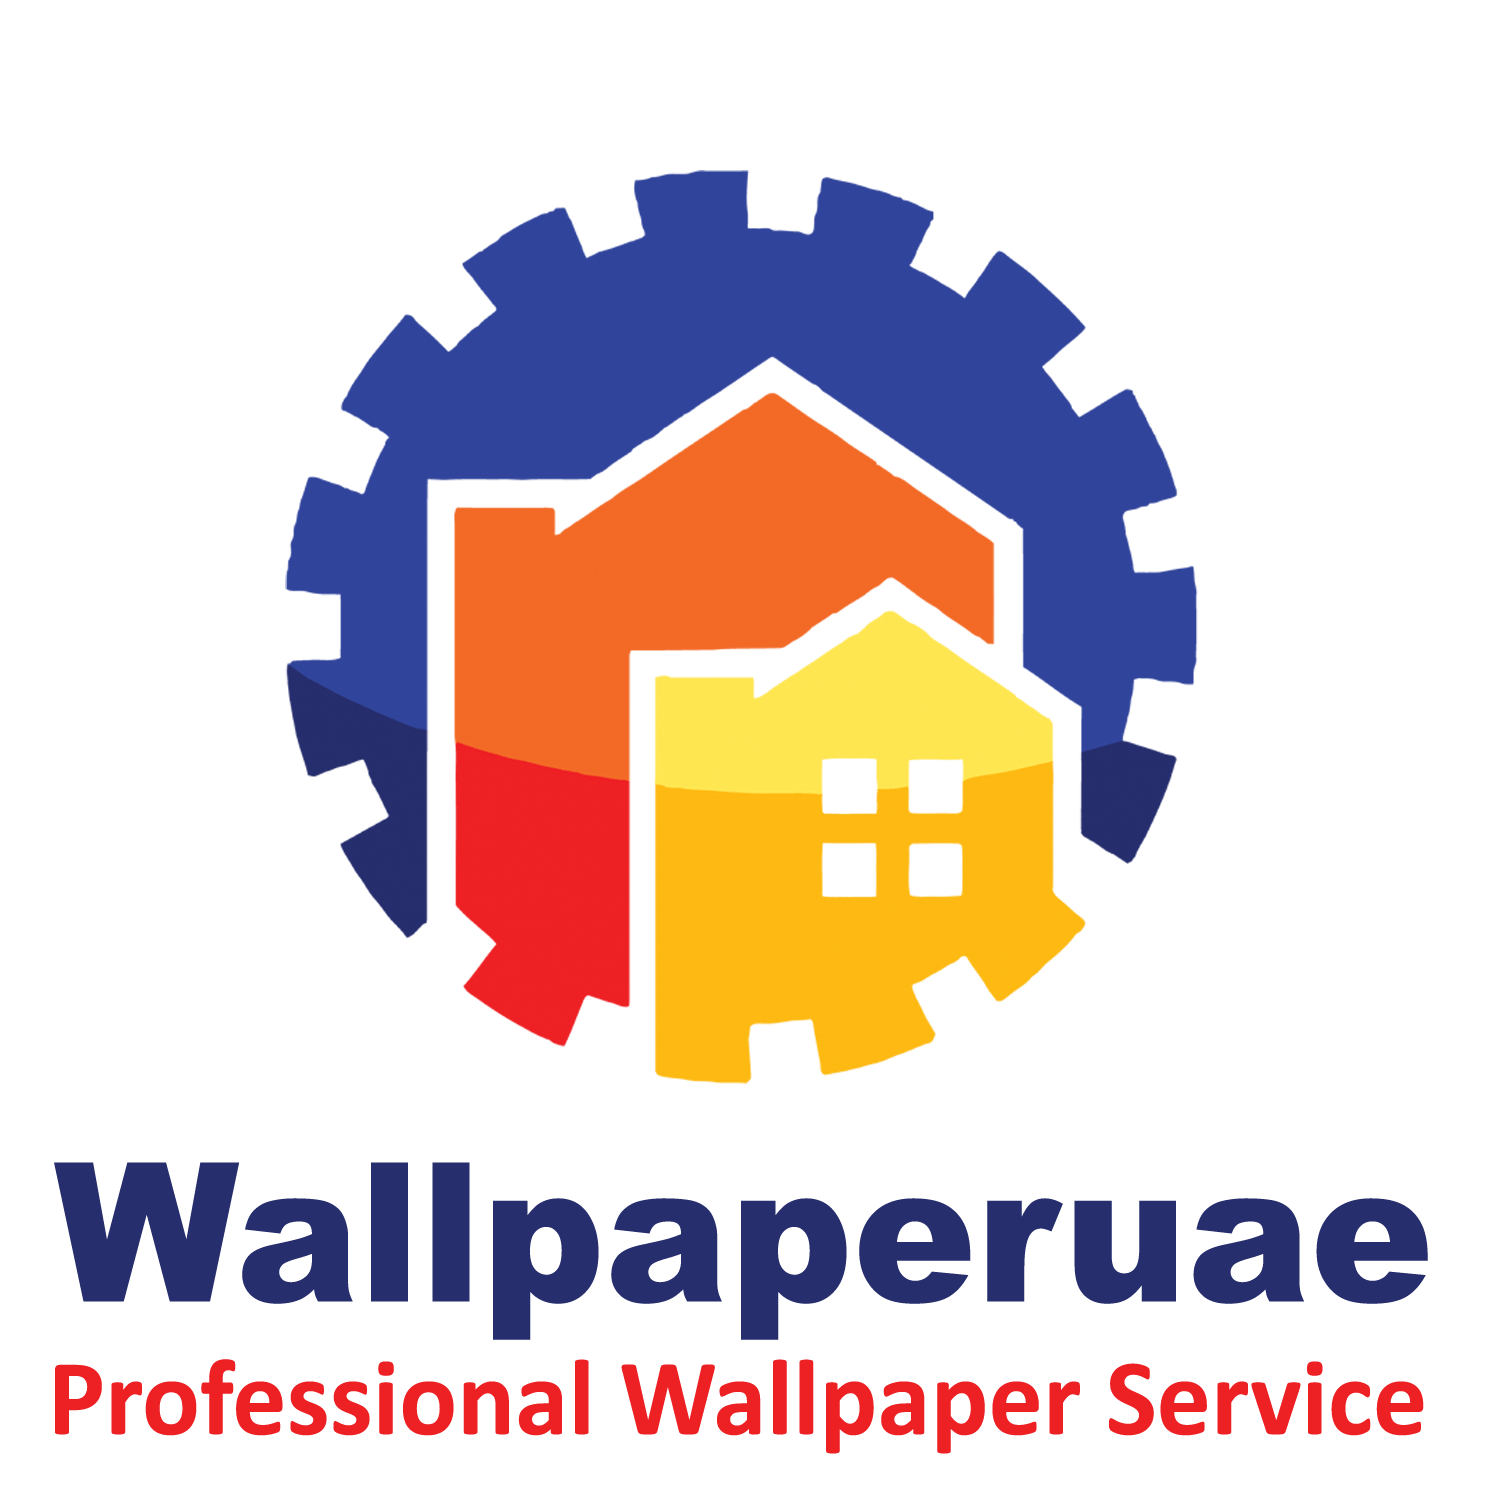 Professional Wallpaper Service